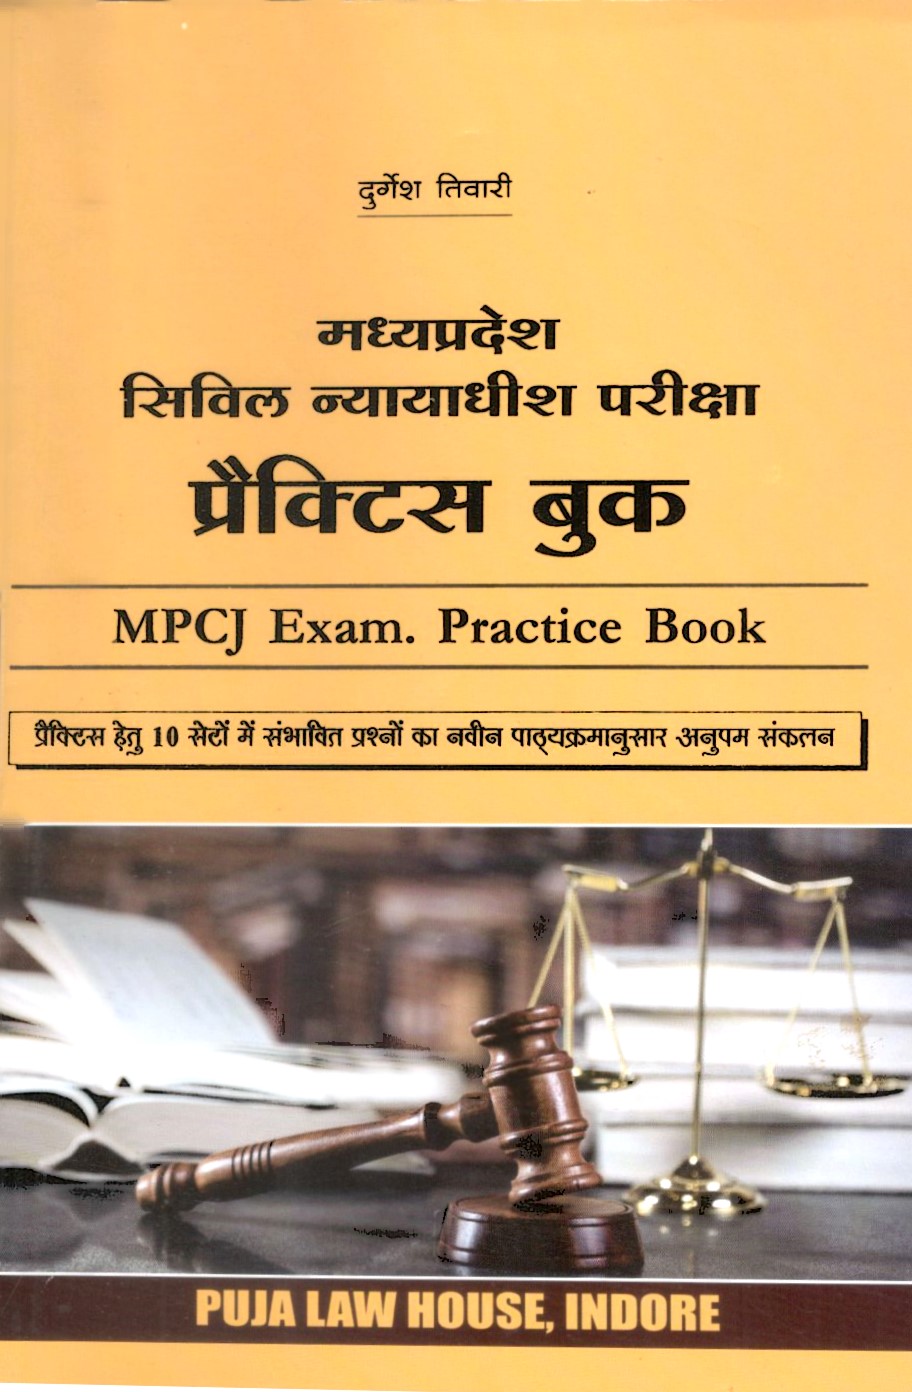  Buy MPCJ Exam. Practice Book /  मध्य प्रदेश सिविल न्यायाधीश परीक्षा प्रैक्टिस बुक